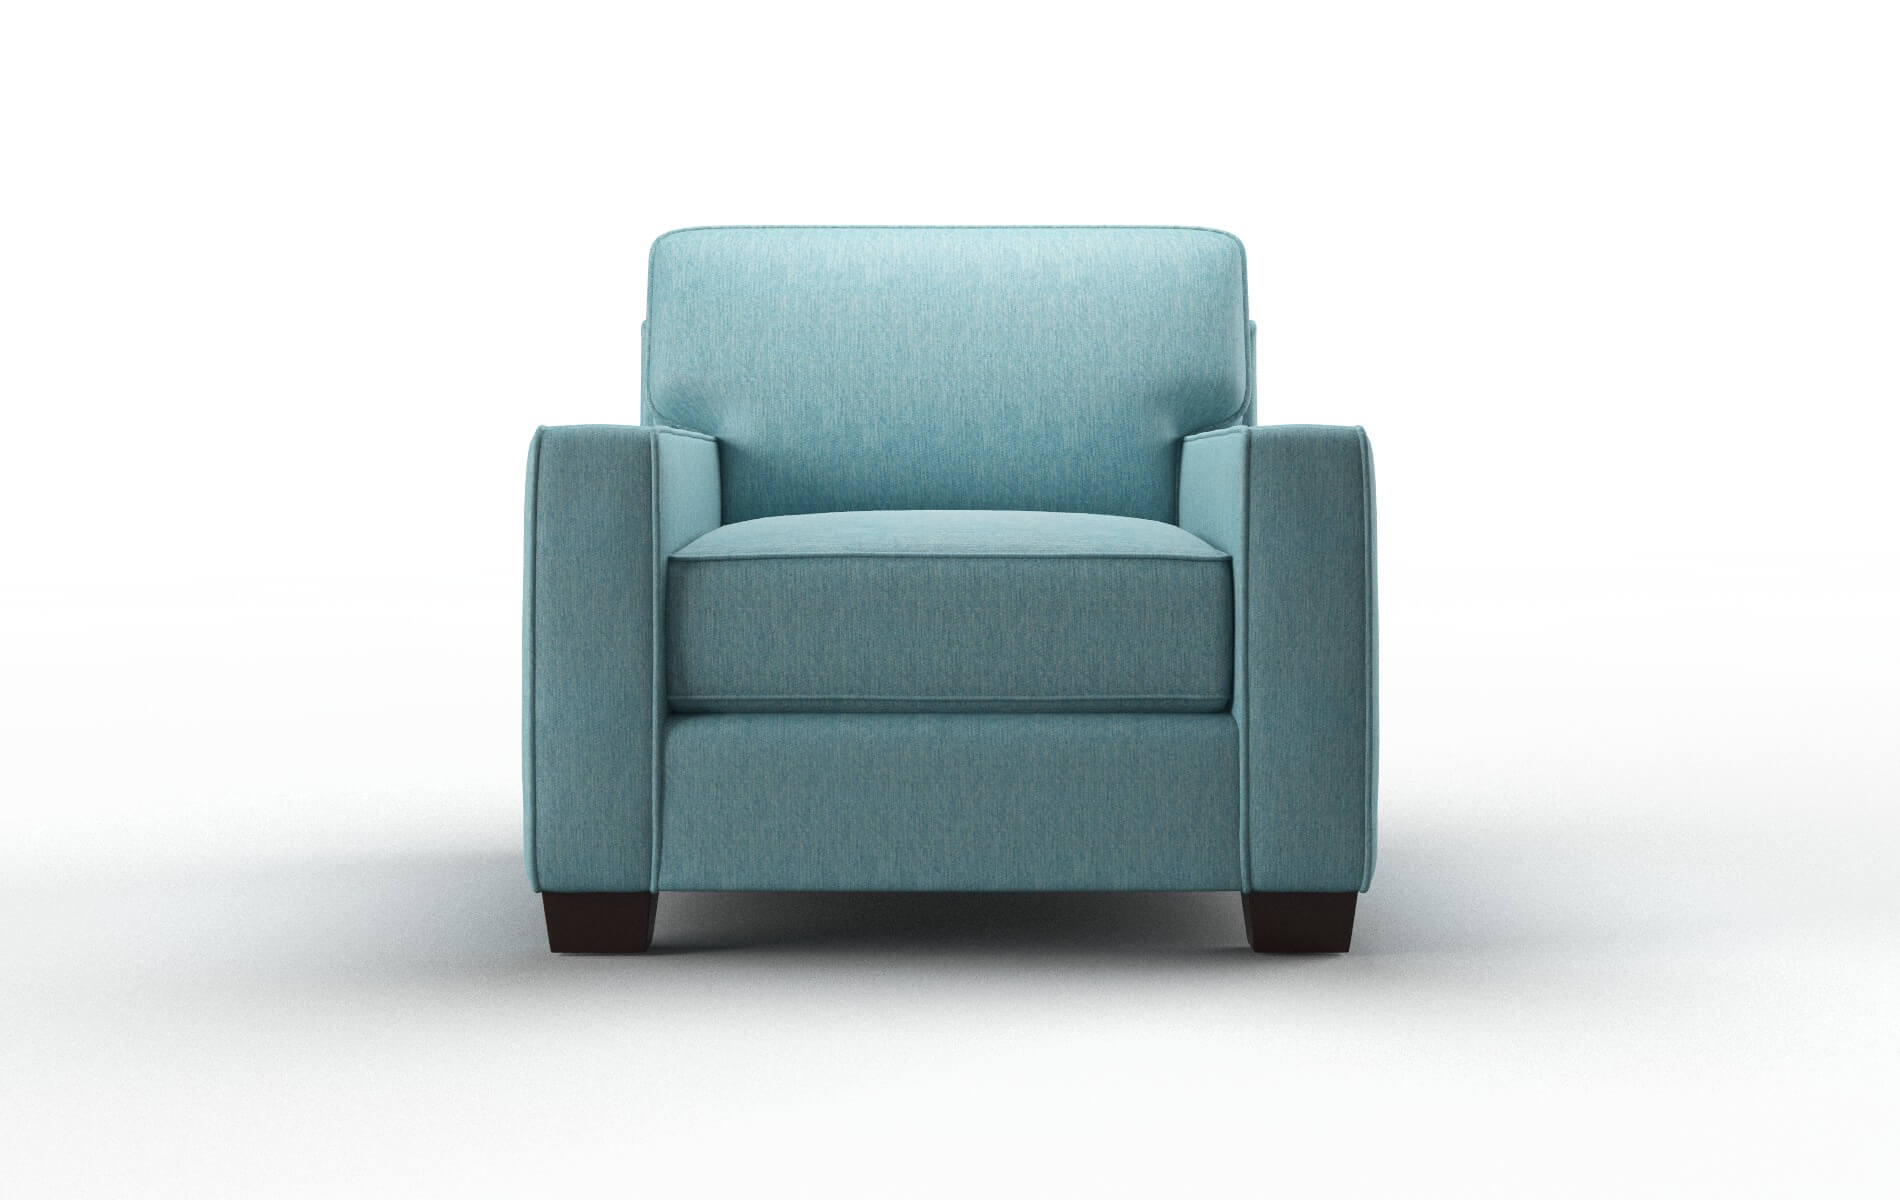 Chicago Cosmo Turquoise Chair espresso legs 1